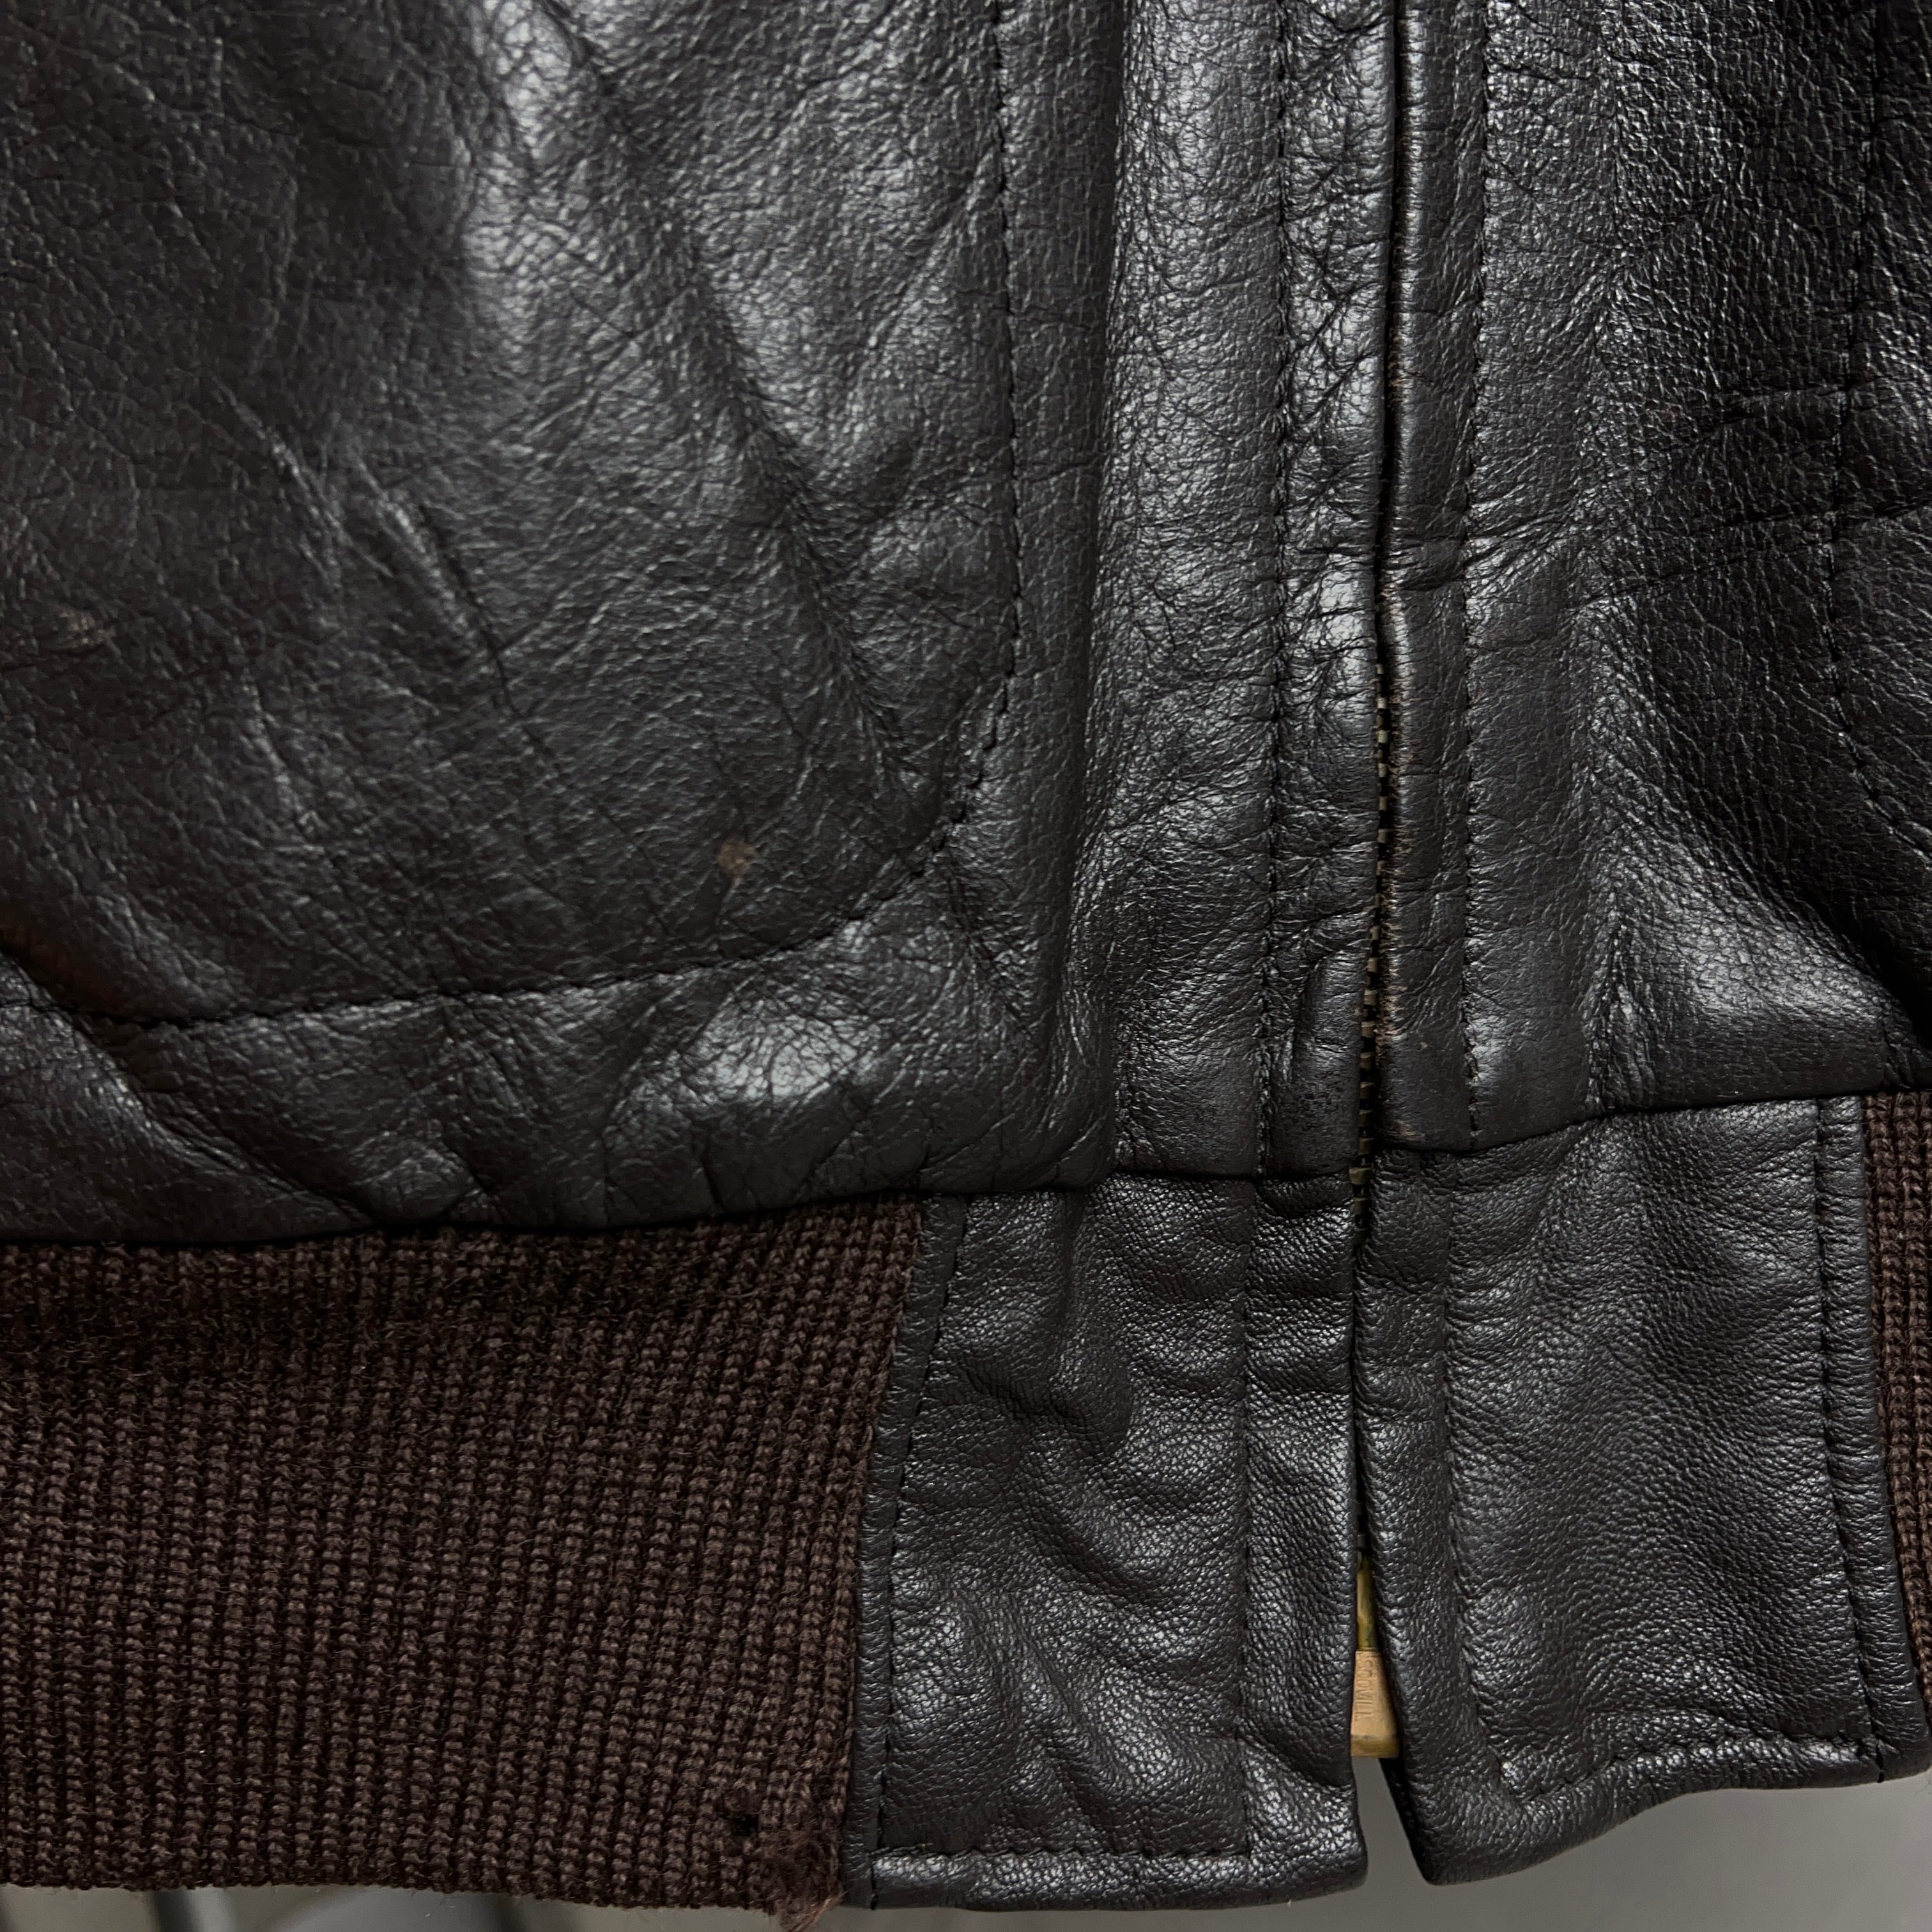 's~'s “L.L.Bean” G Leather Flight Jacket USA製 年代 年代